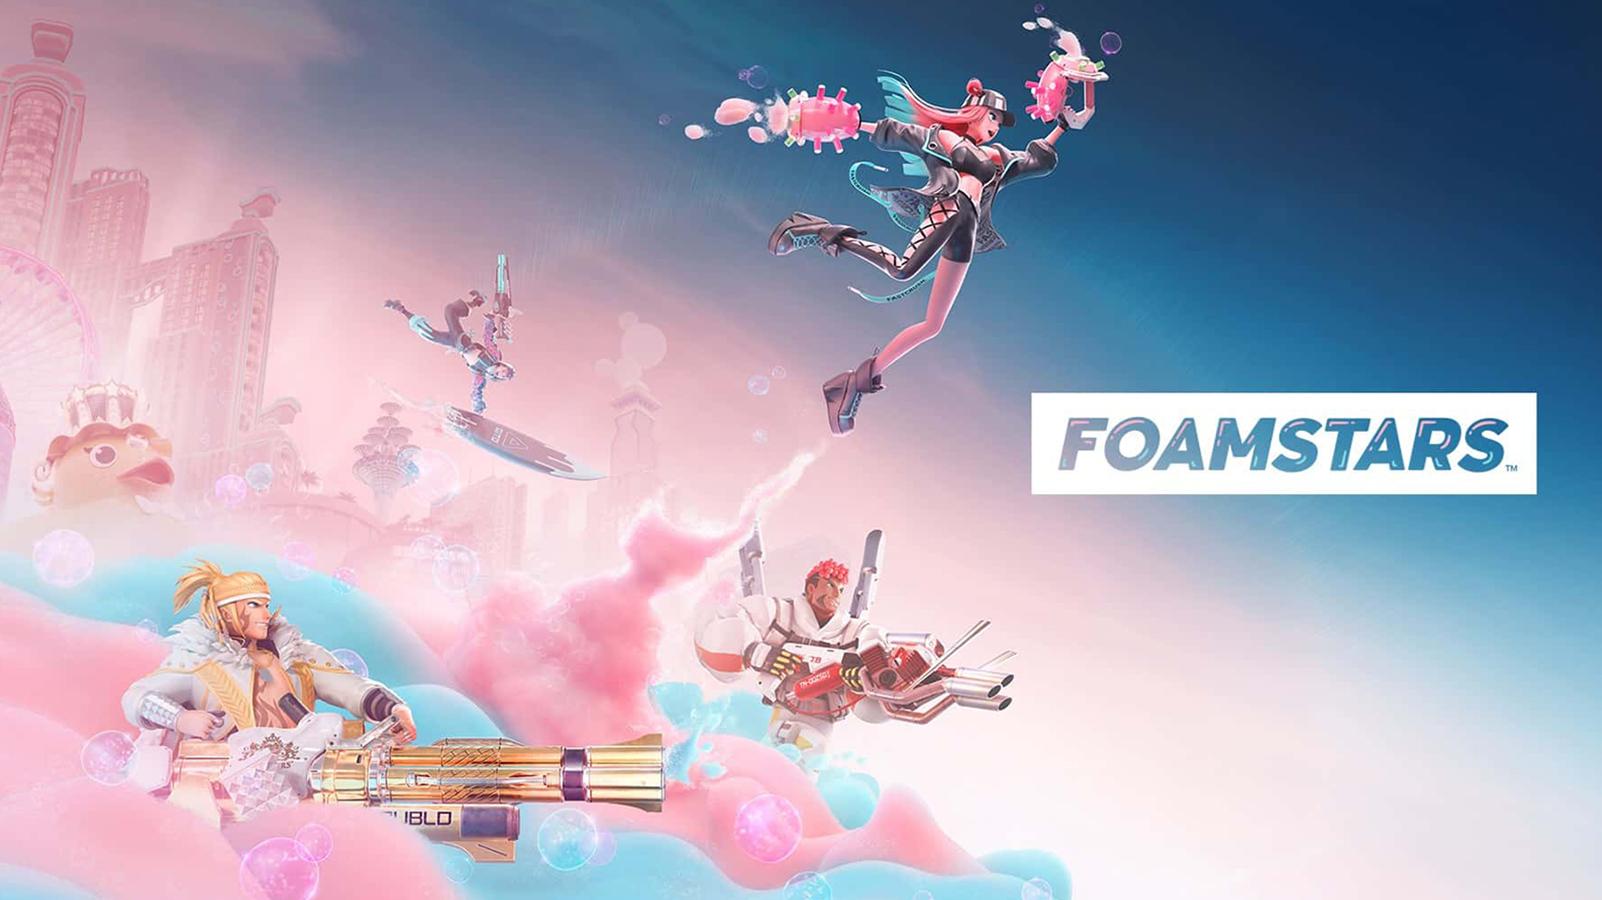 Foamstars cover art